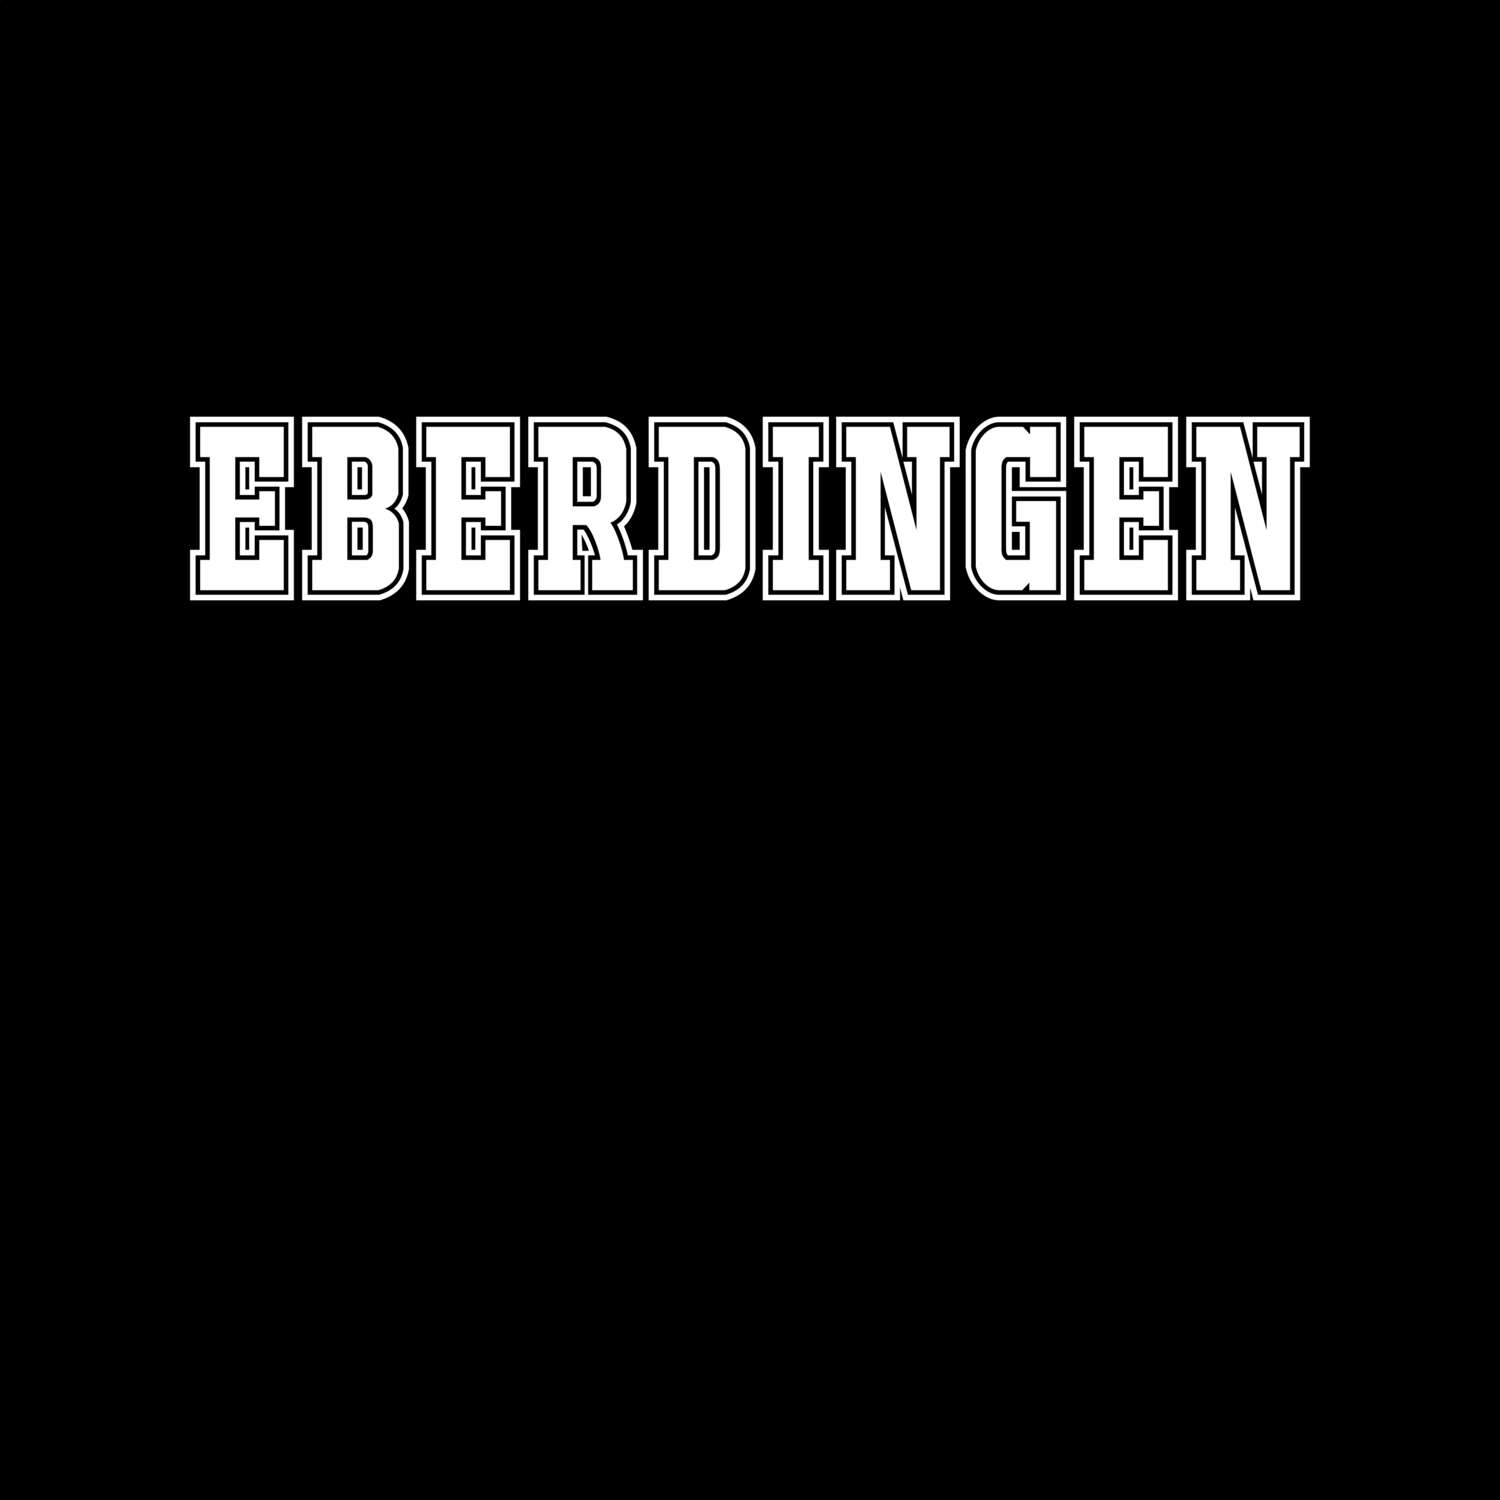 Eberdingen T-Shirt »Classic«